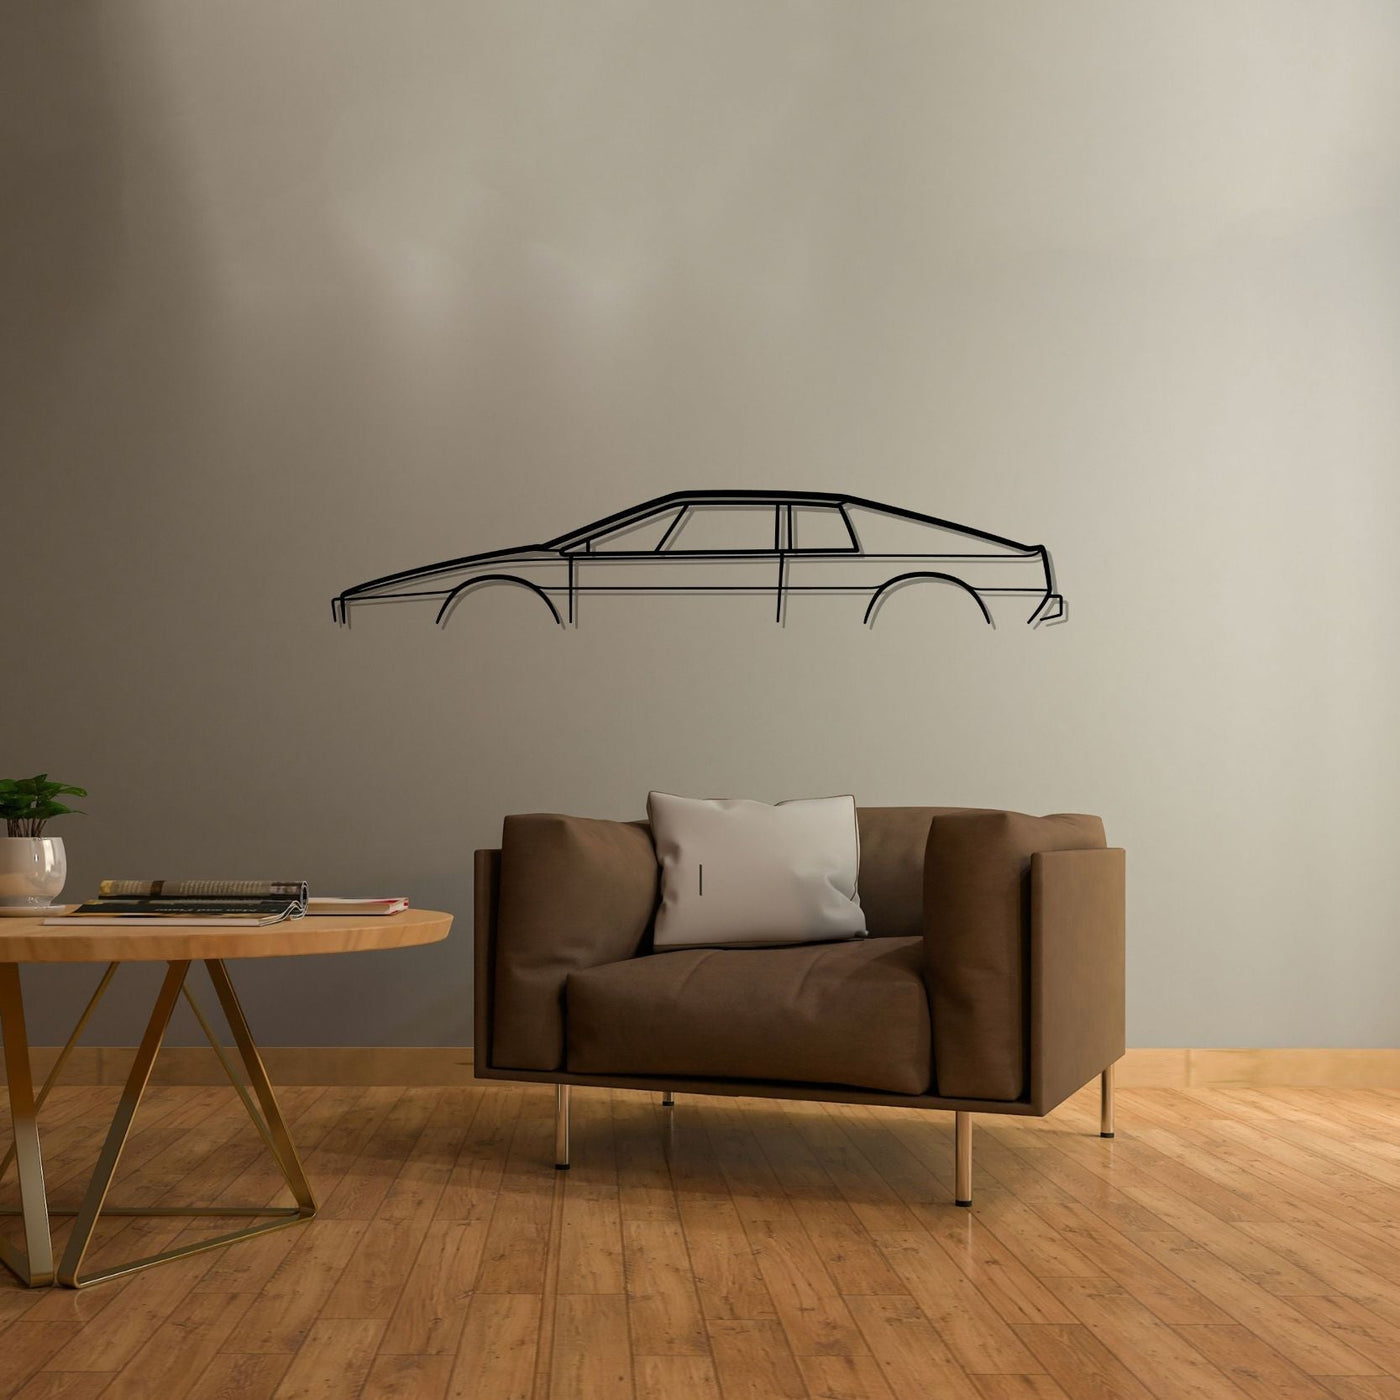 Esprit S1 Classic Silhouette Metal Wall Art